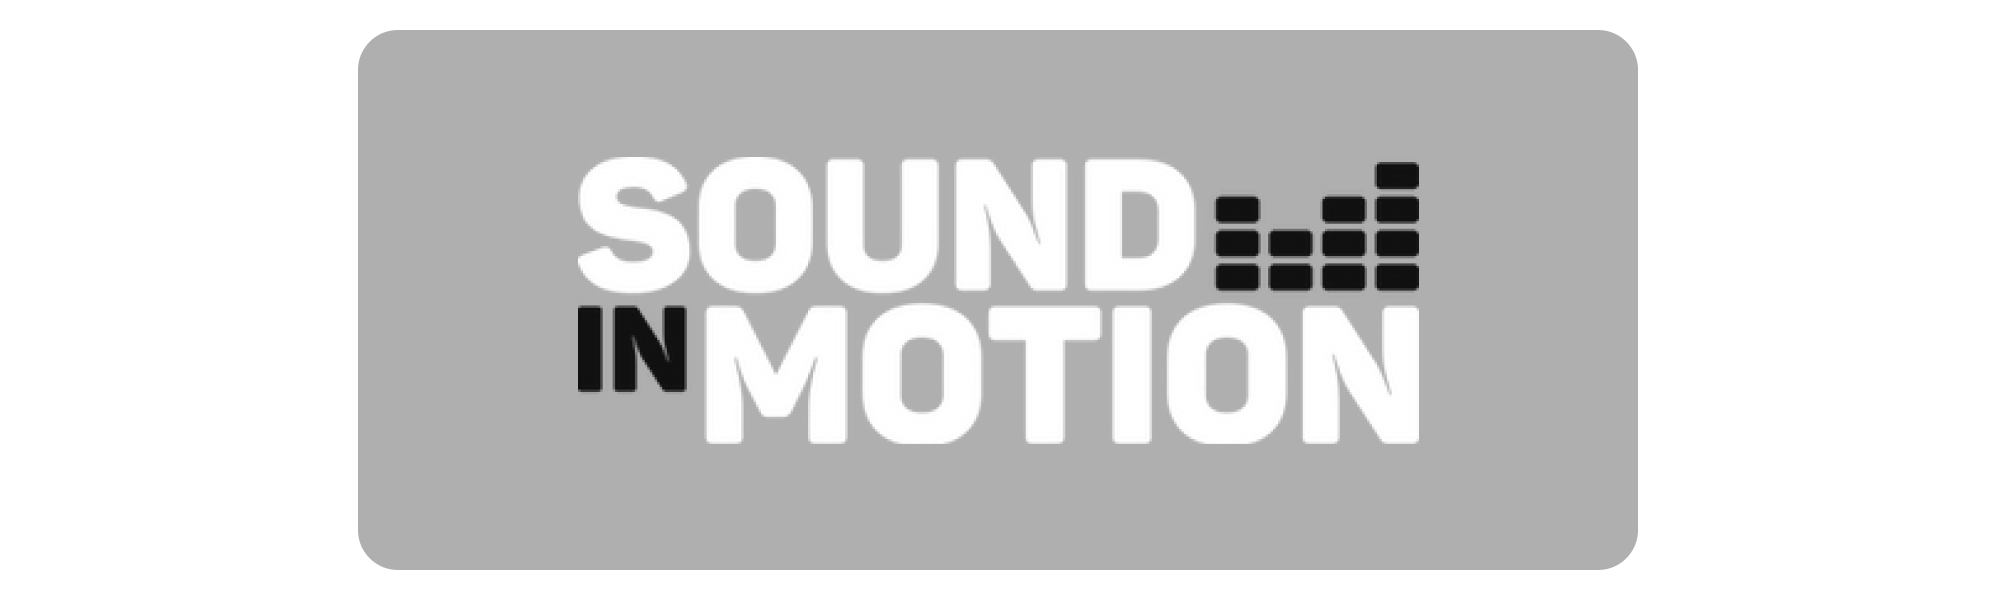 SoundinMotion logo